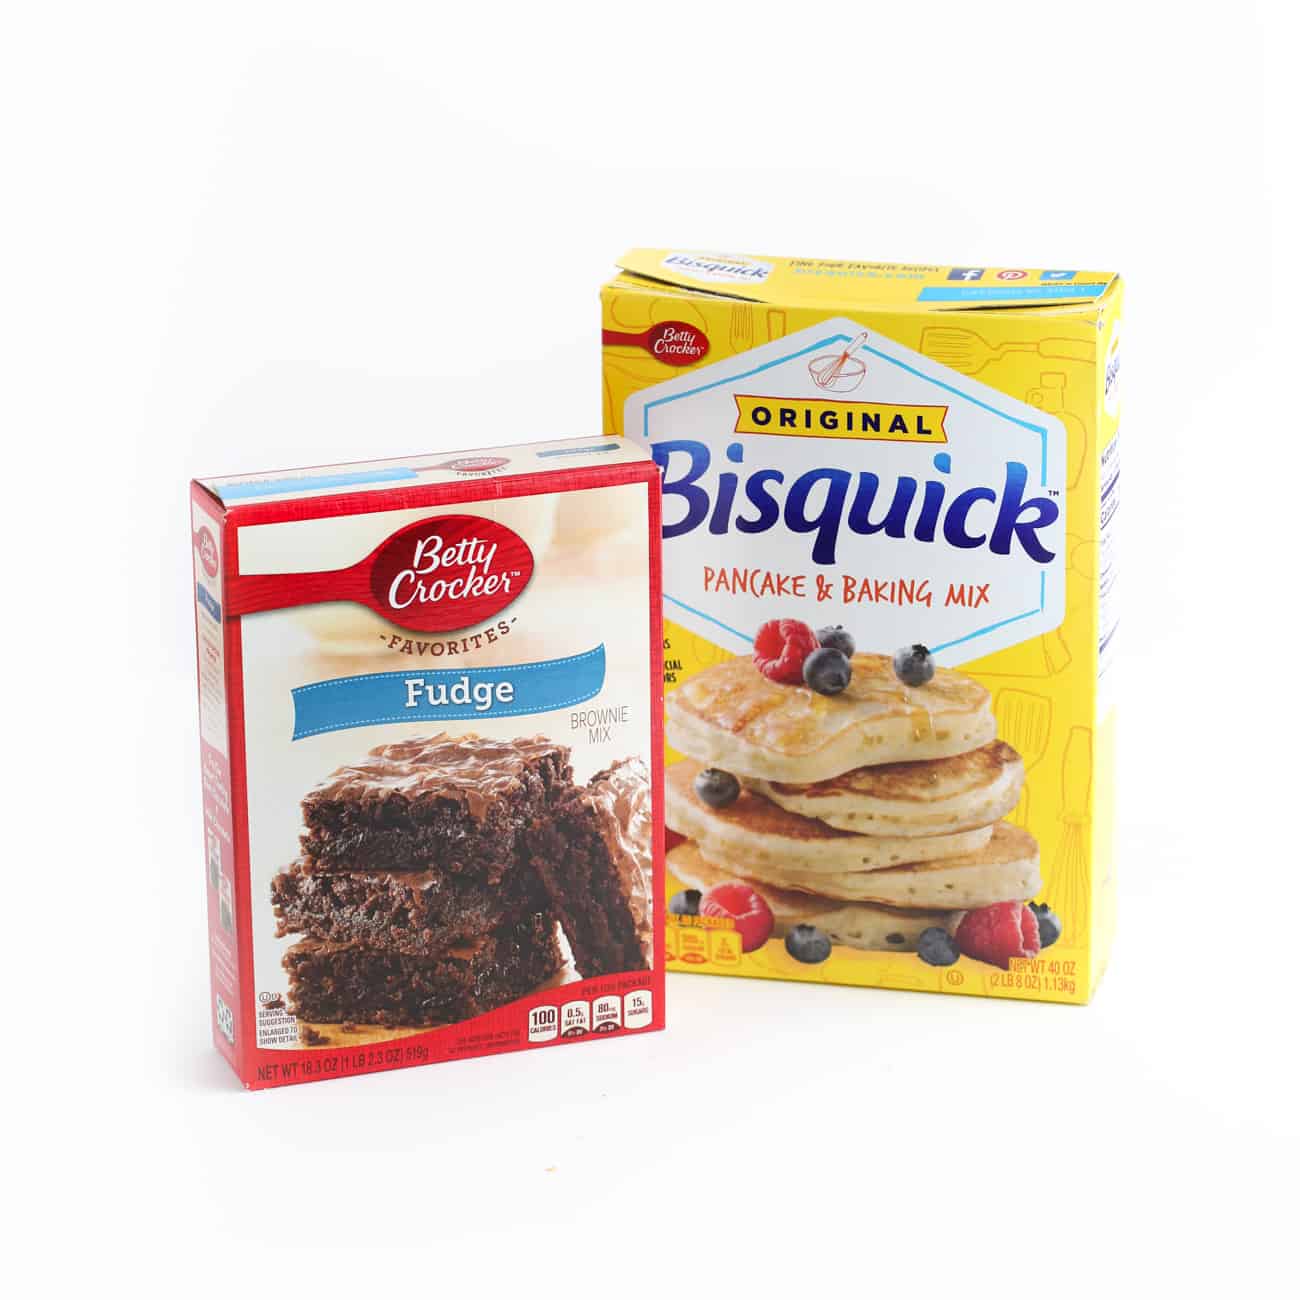 Box of Betty Crocker fudge brownie mix and box of Bisquick pancake & baking mix for chocolate brownie cookies.